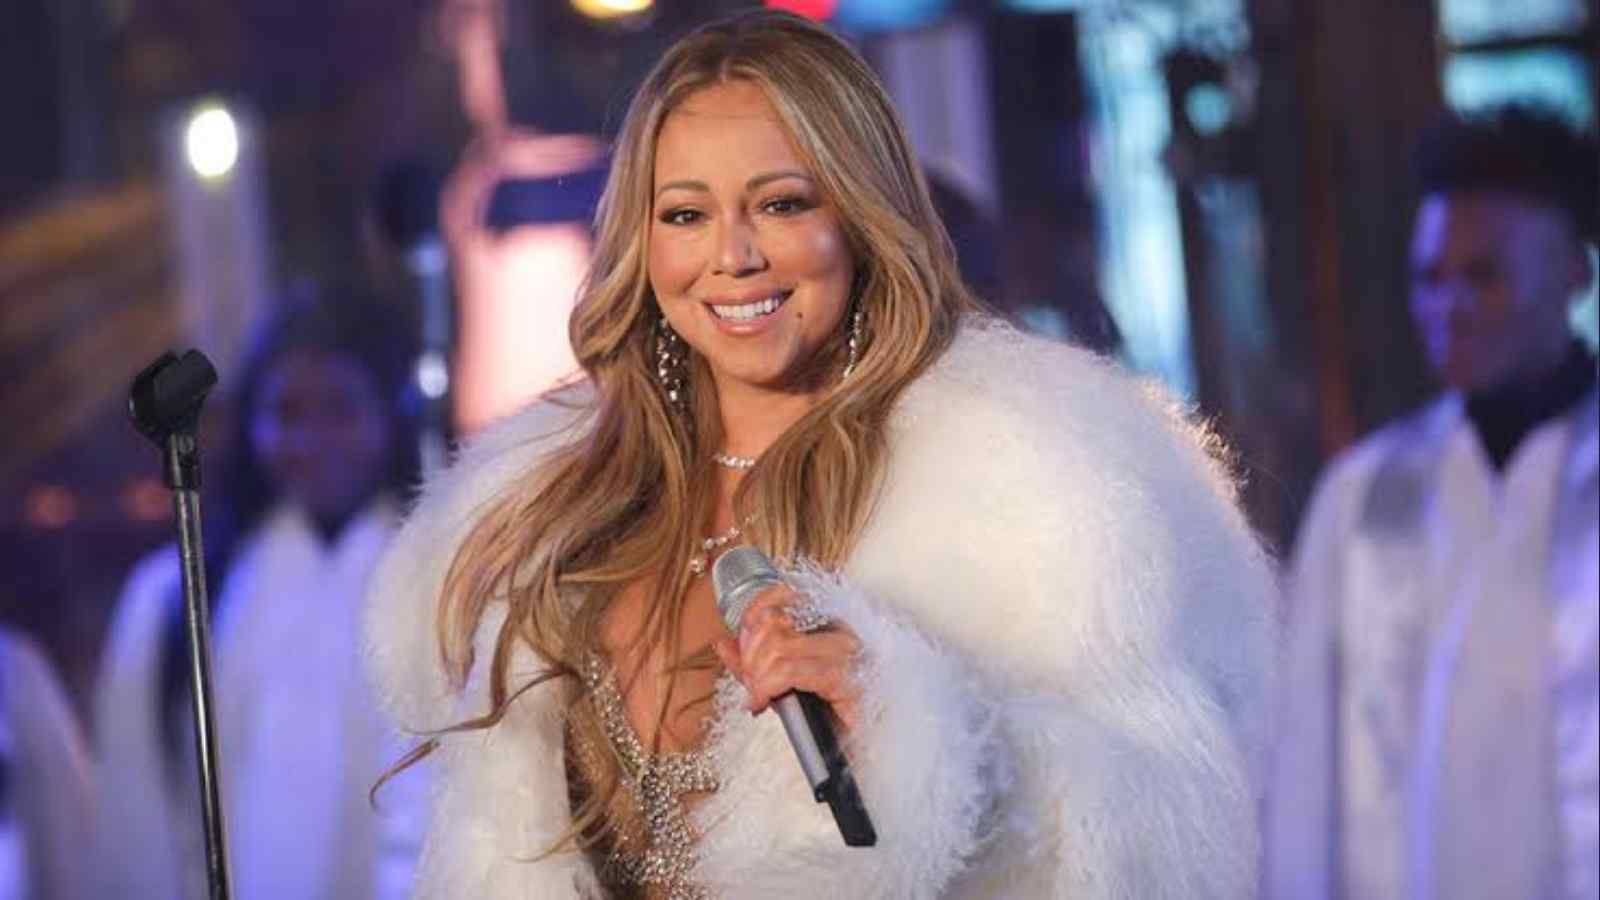 Mariah Carey during her performance